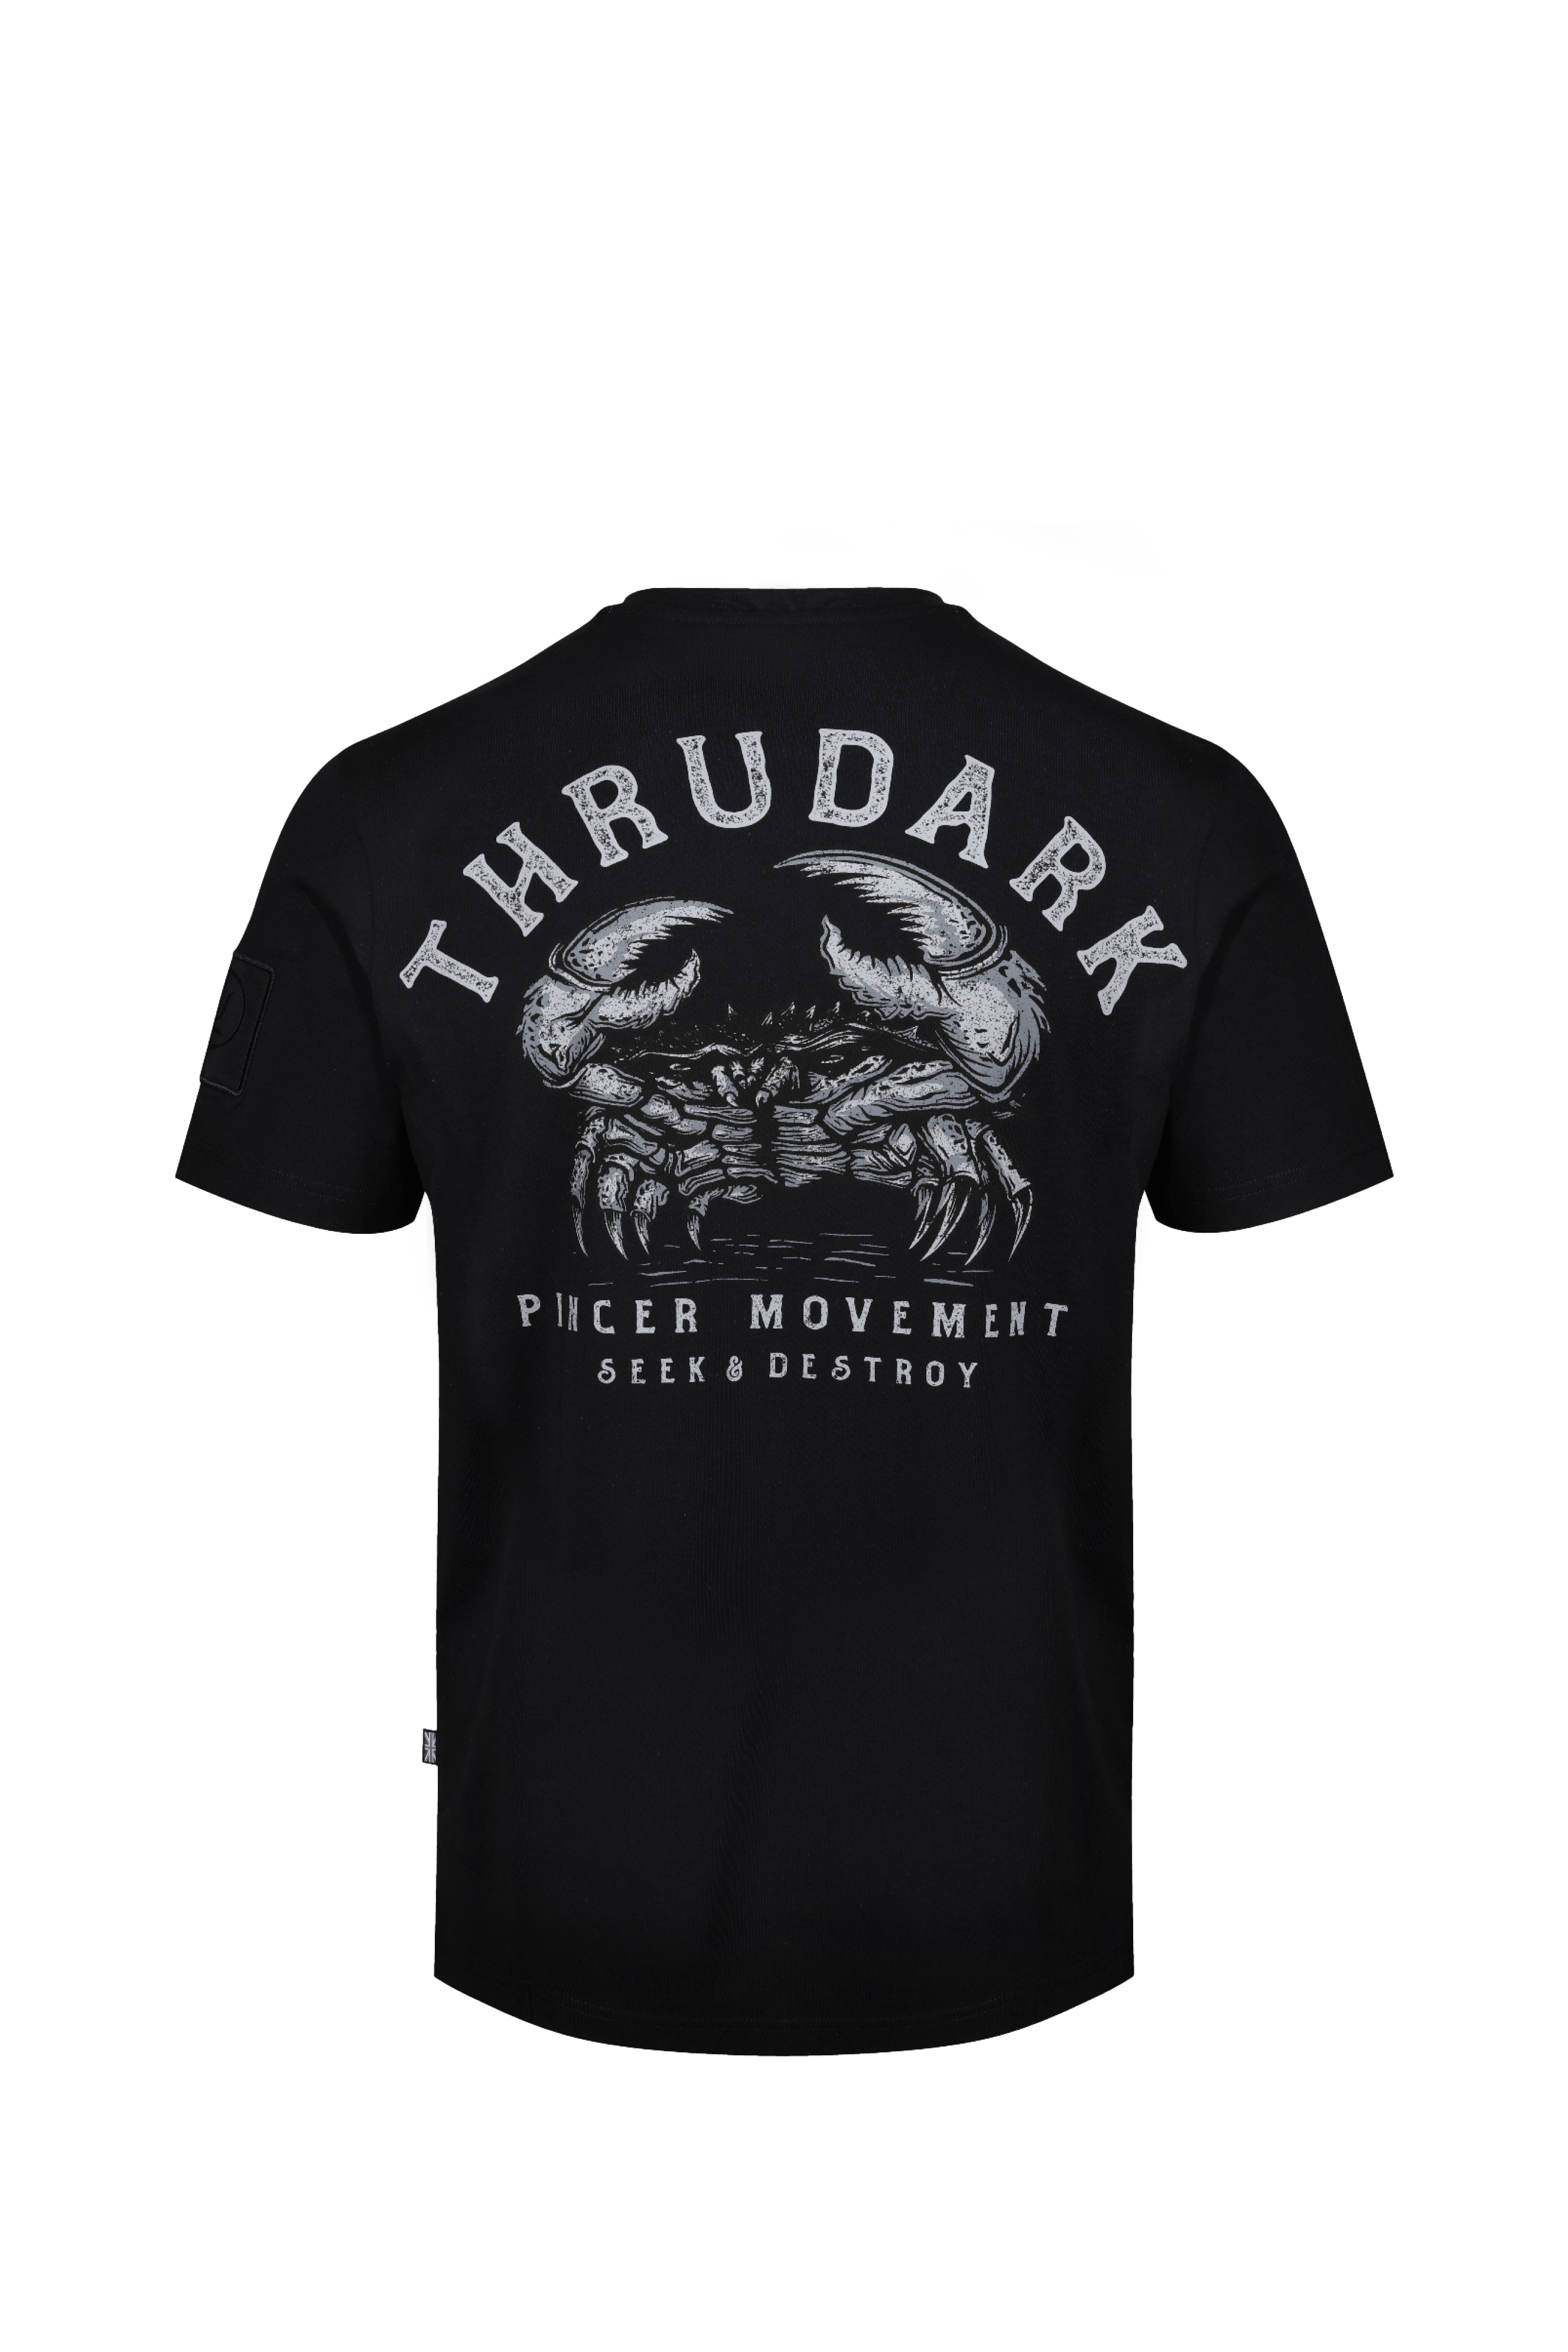 Thrudark  Insignia T-shirt - Pincer Movement Xxl